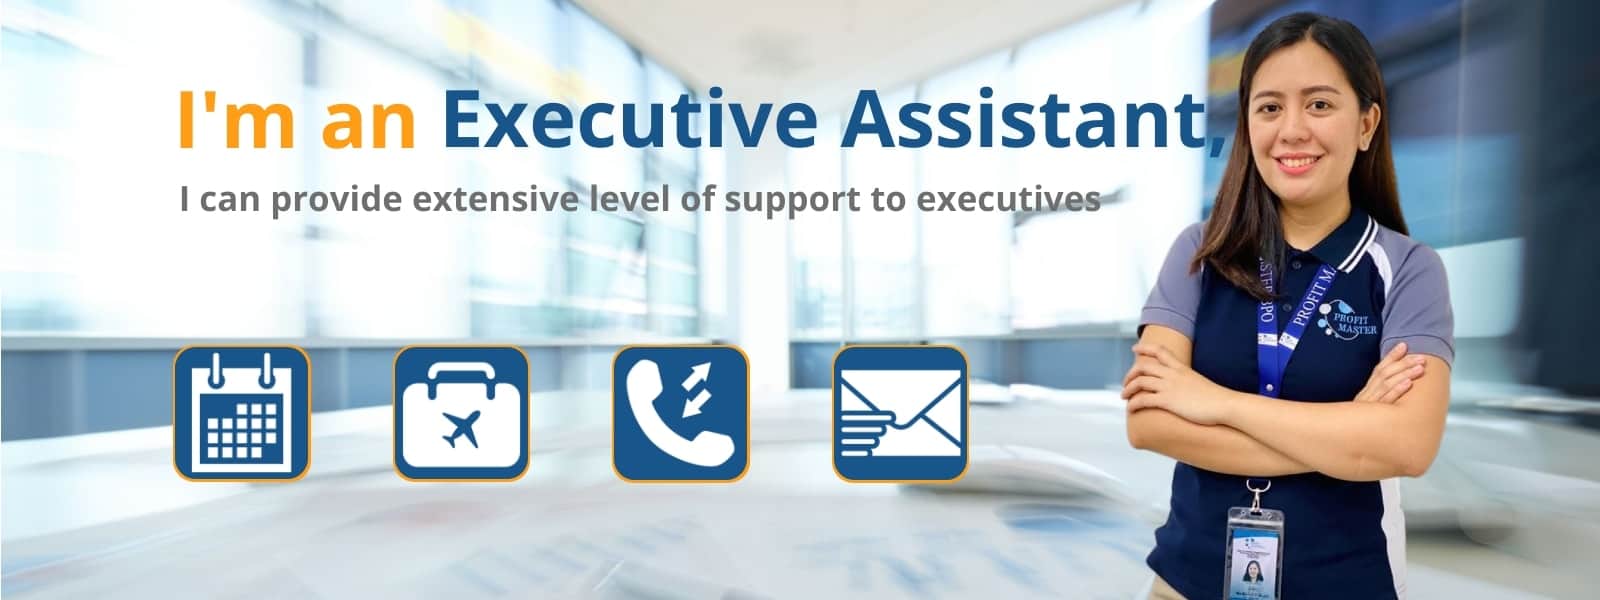 executive_assistant